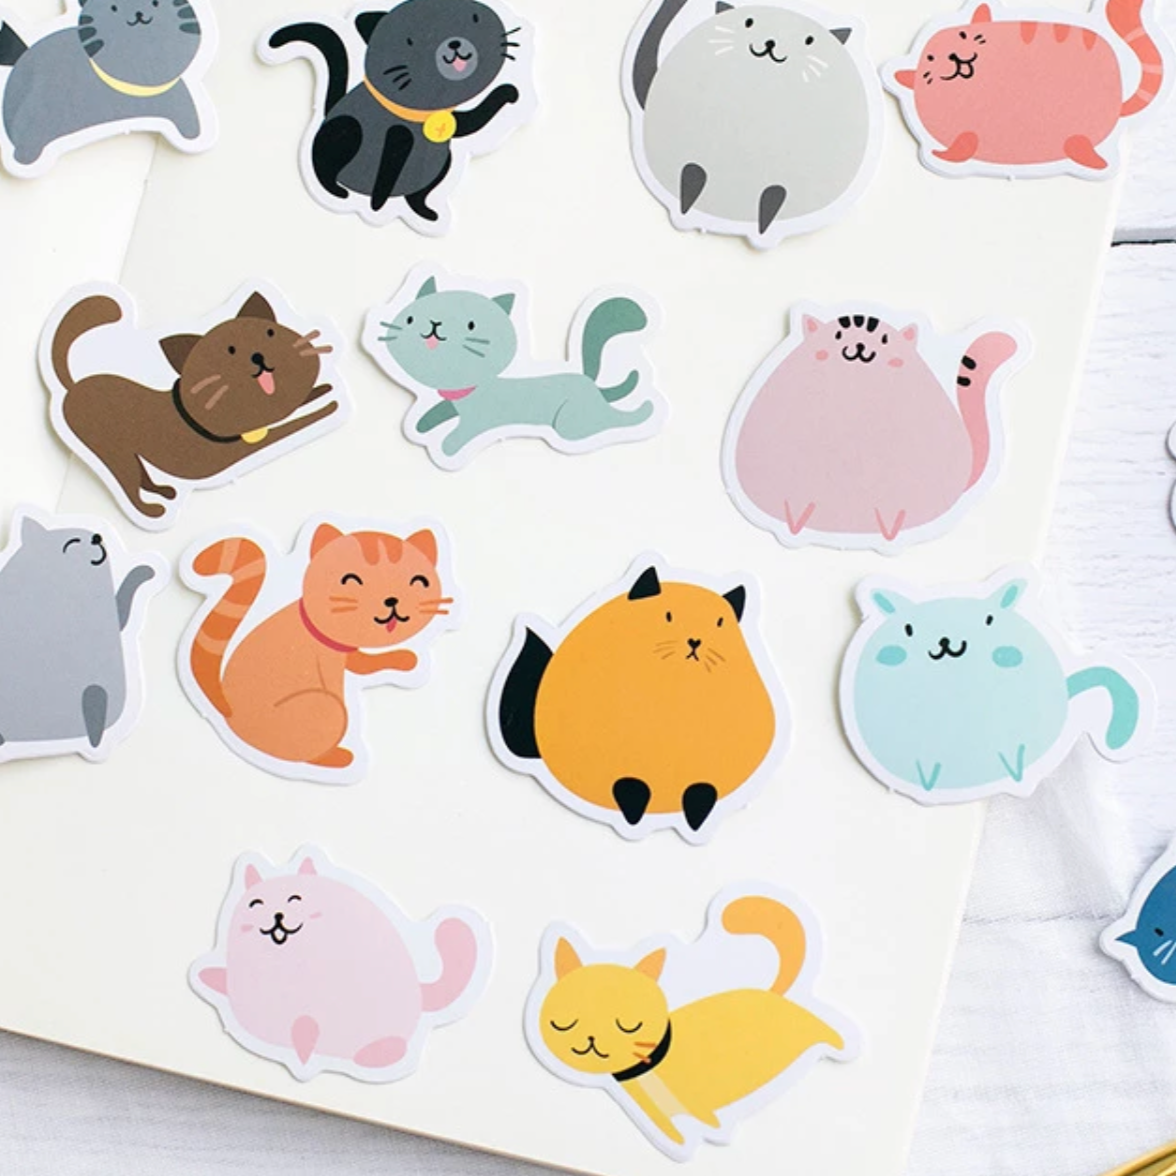 Kitten Stickers - pack of 45